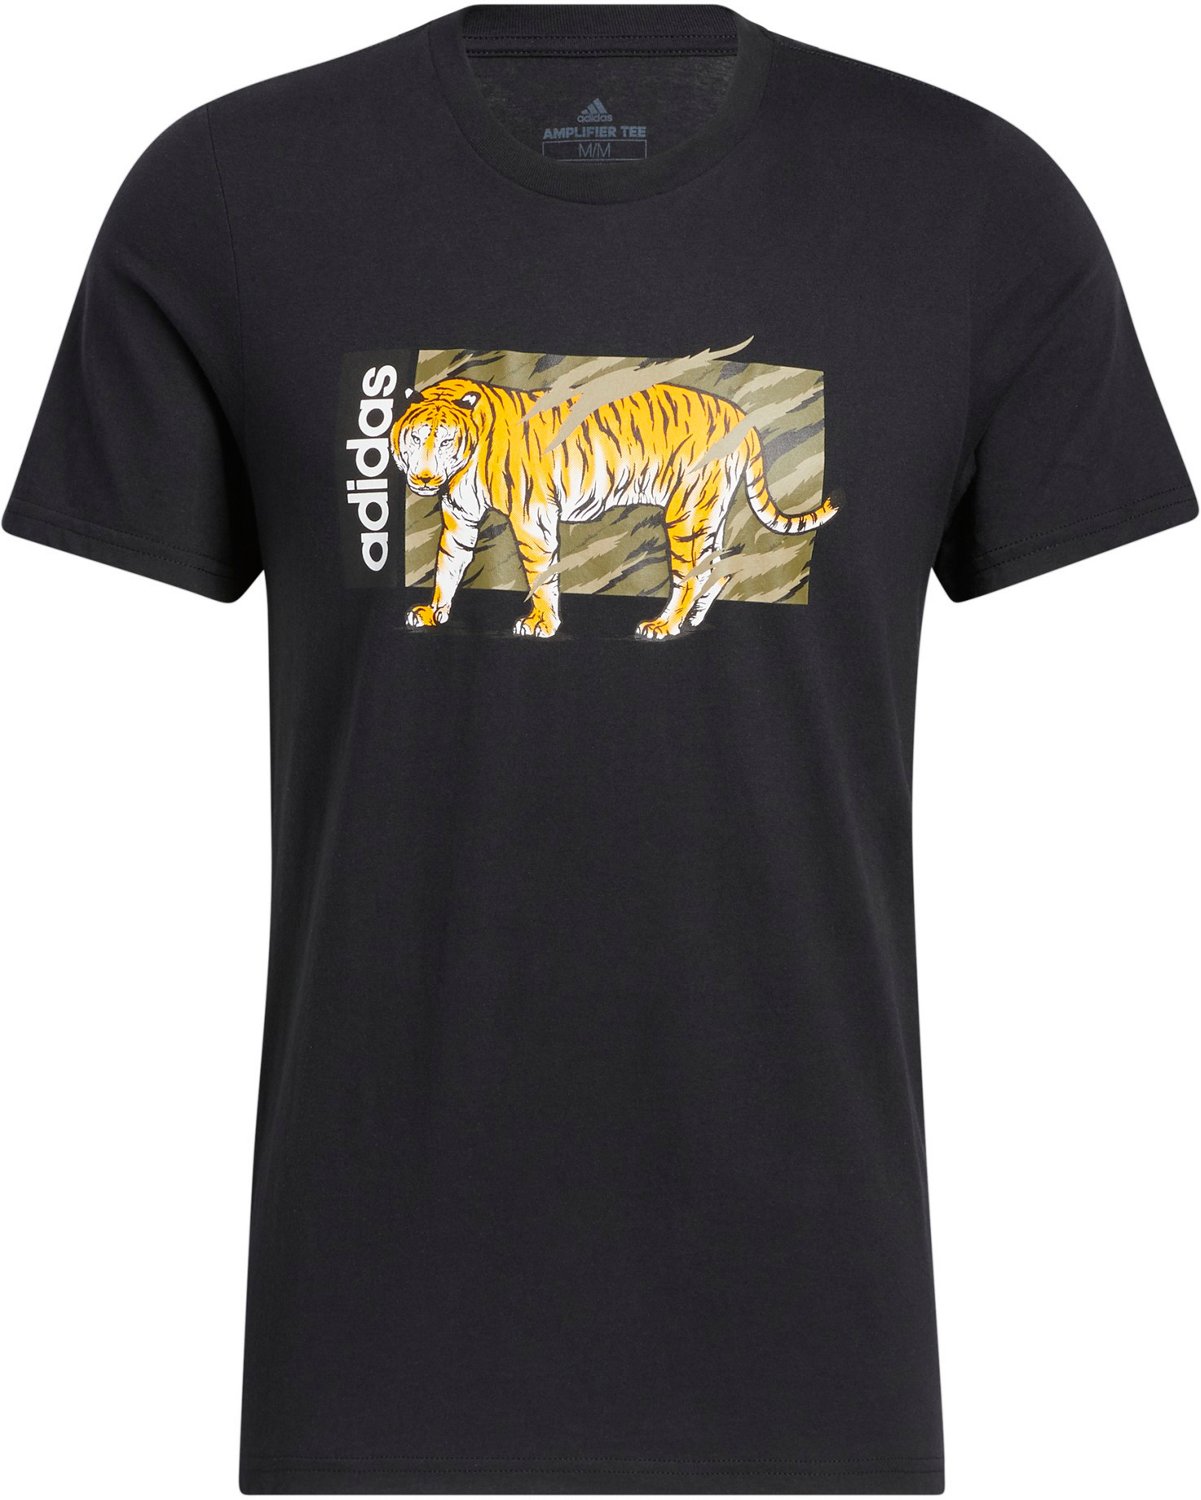 adidas Men's Tiger Graphic Short Sleeve T-shirt